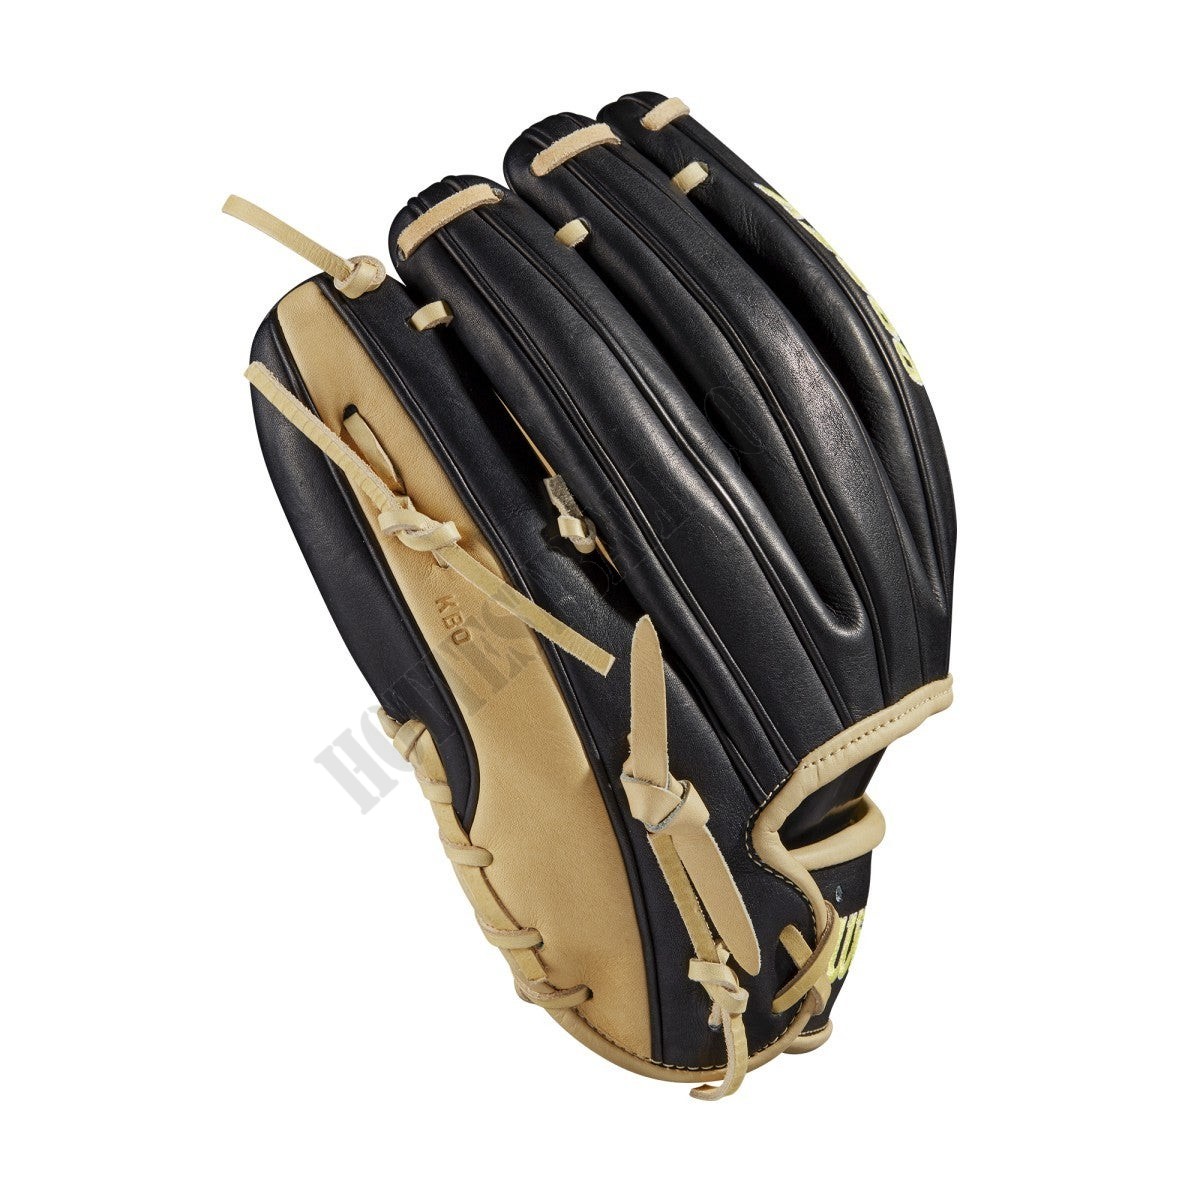 2021 A2000 1786 11.5" Infield Baseball Glove ● Wilson Promotions - -4